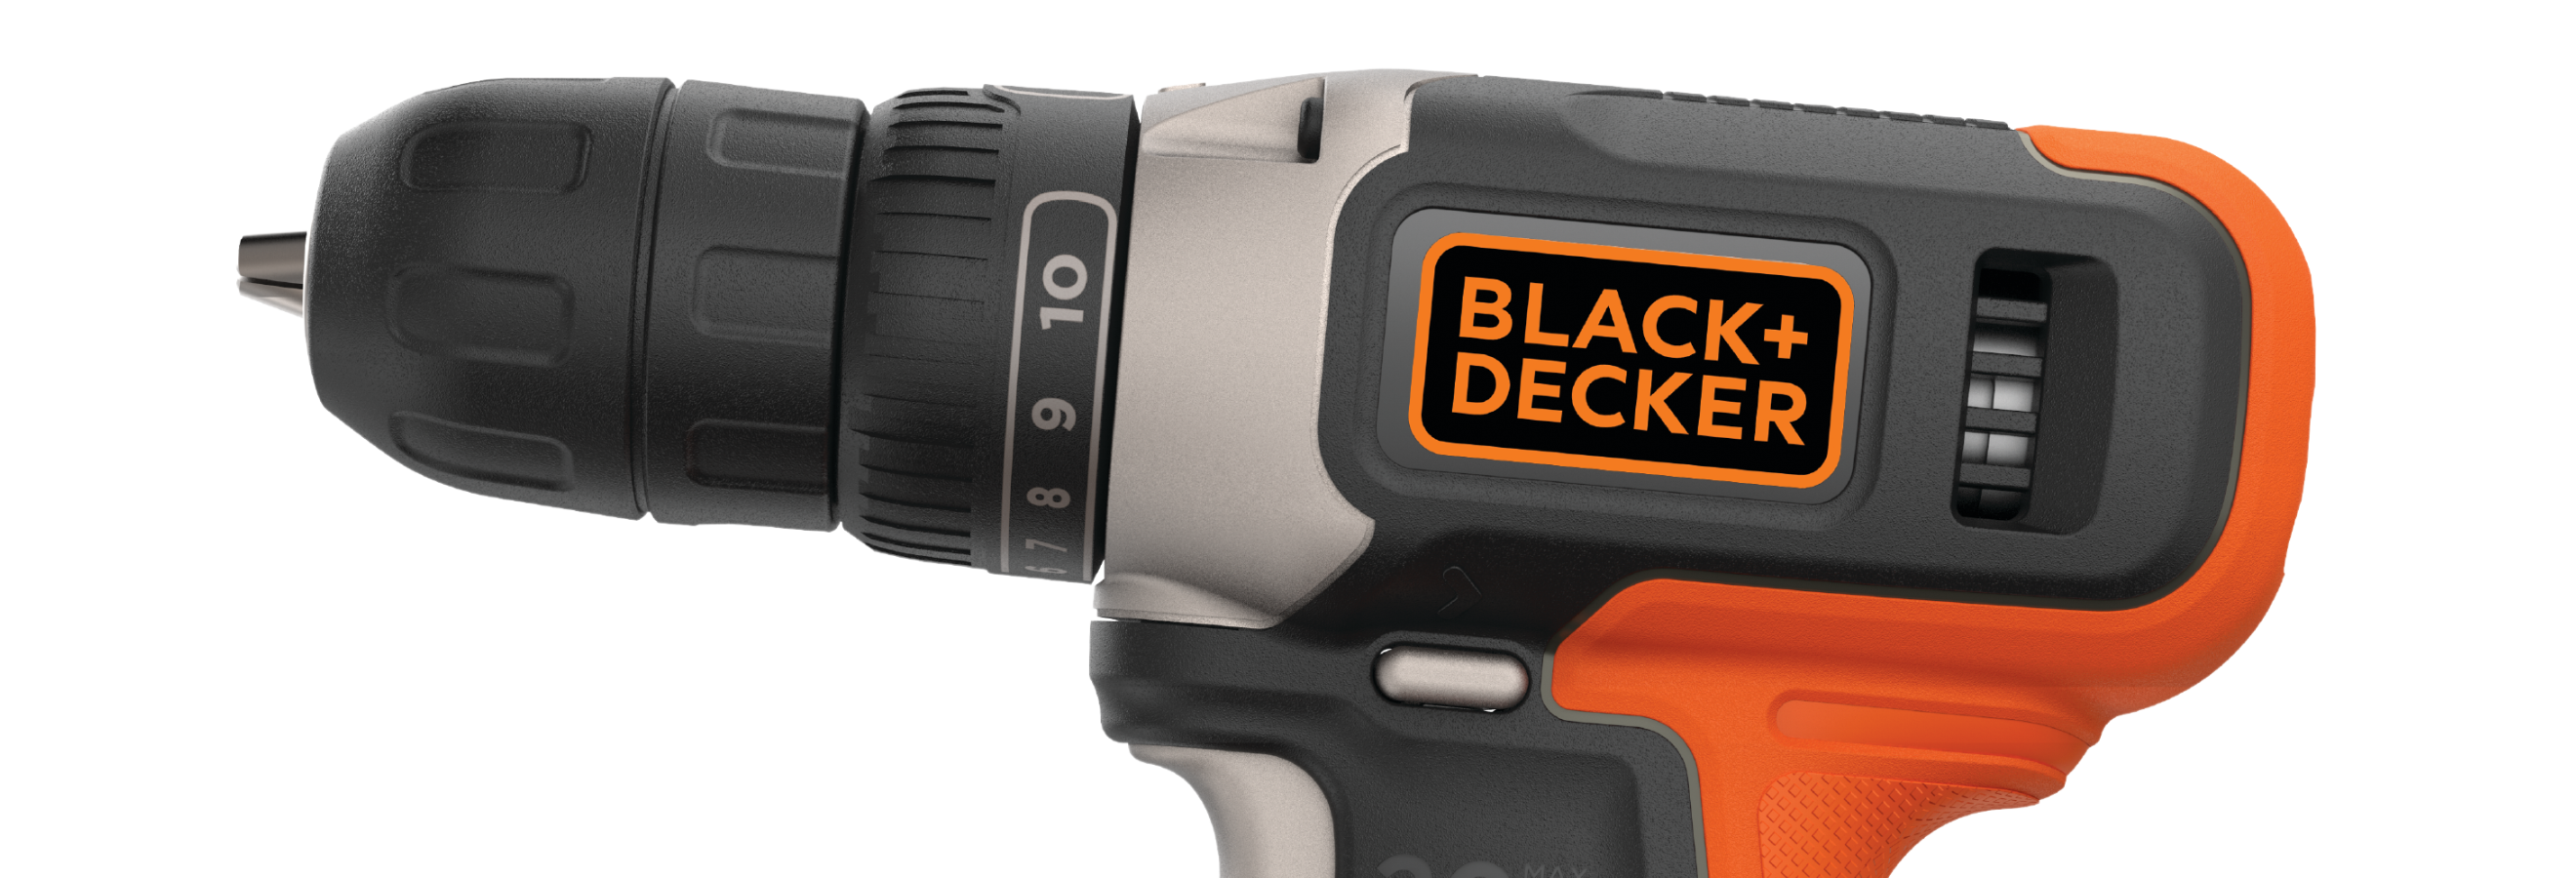 Black+decker - 20V Max Cordless Drill (BCD702C1)